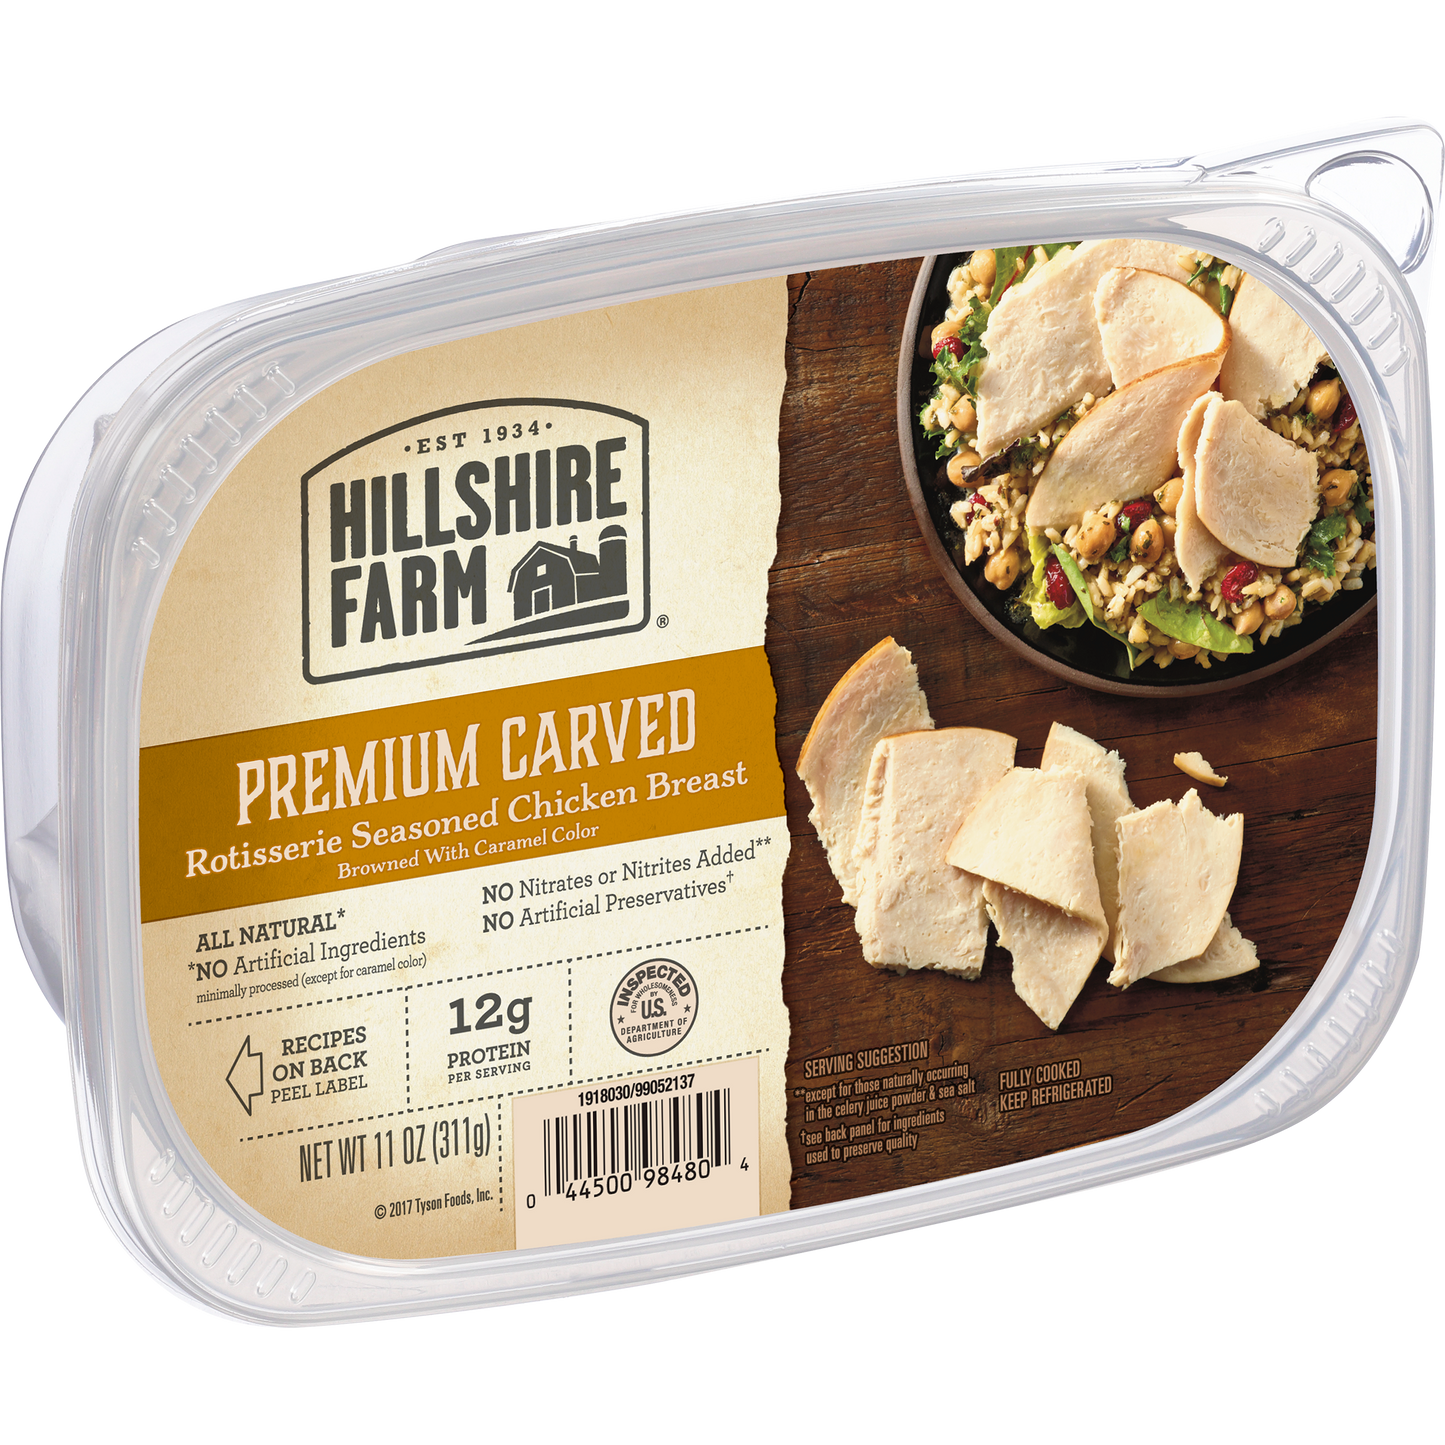 Hillshire Farm Premium Carved Deli Lunch Meat, Rotisserie Seasoned Chicken Breast, 11 oz